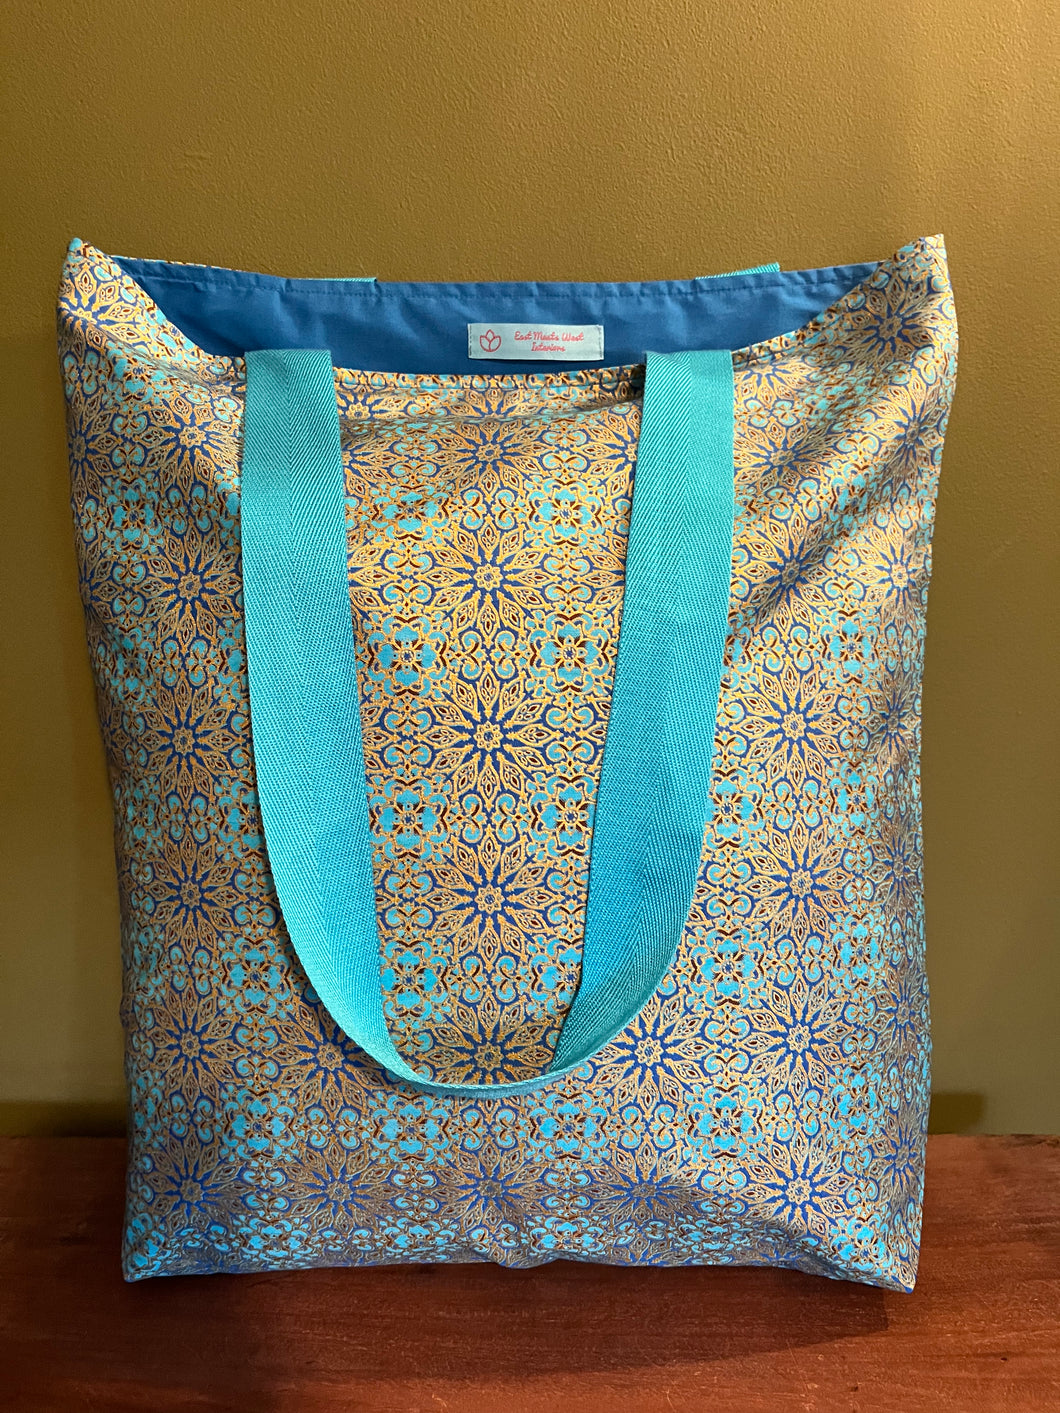 Tote Bag - turquoise and gold mandala type geometric